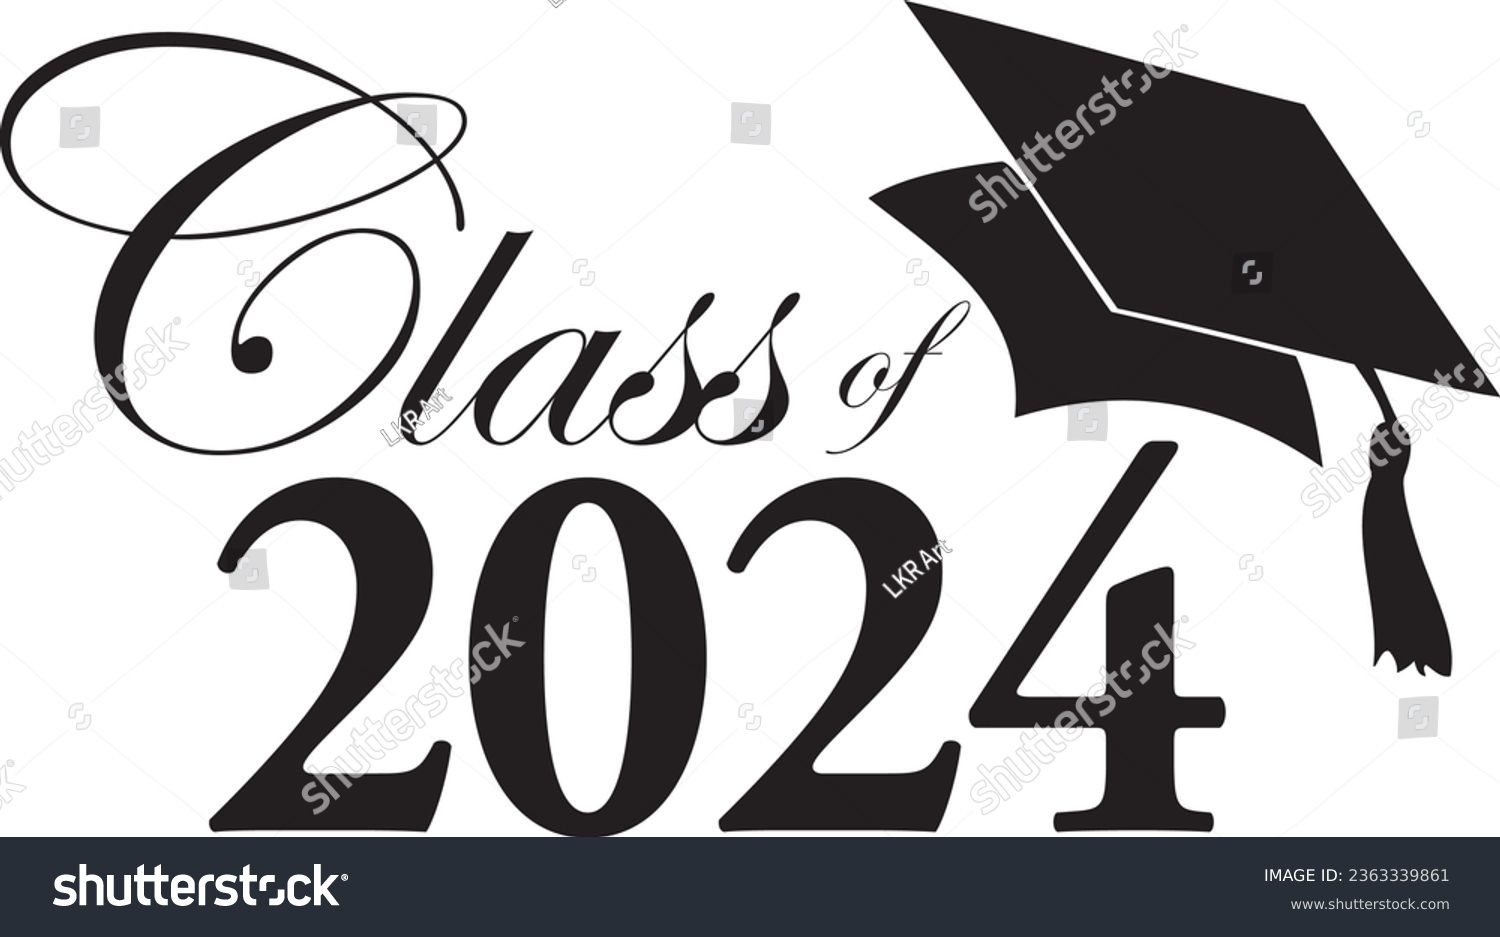 Class of 2024 Graduation Clip Art - Royalty Free Stock Vector ...